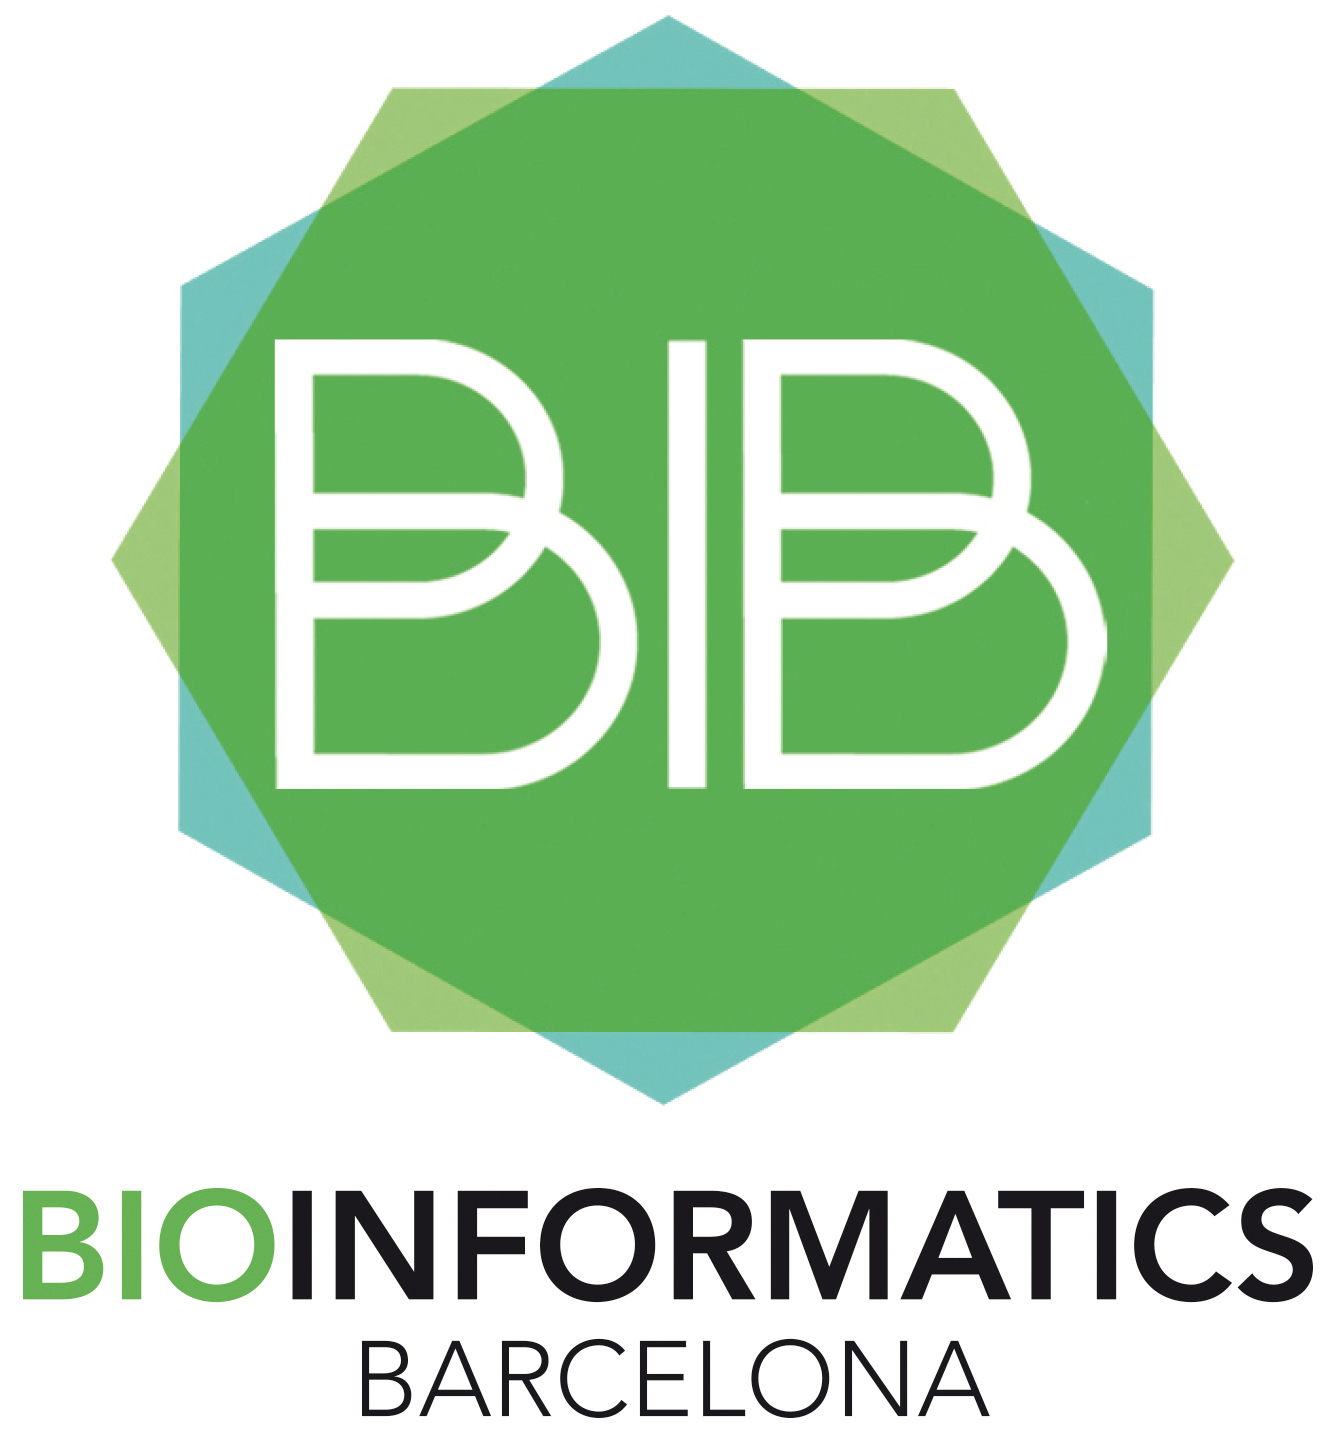 Bioinformatics Barcelona Association (BIB)